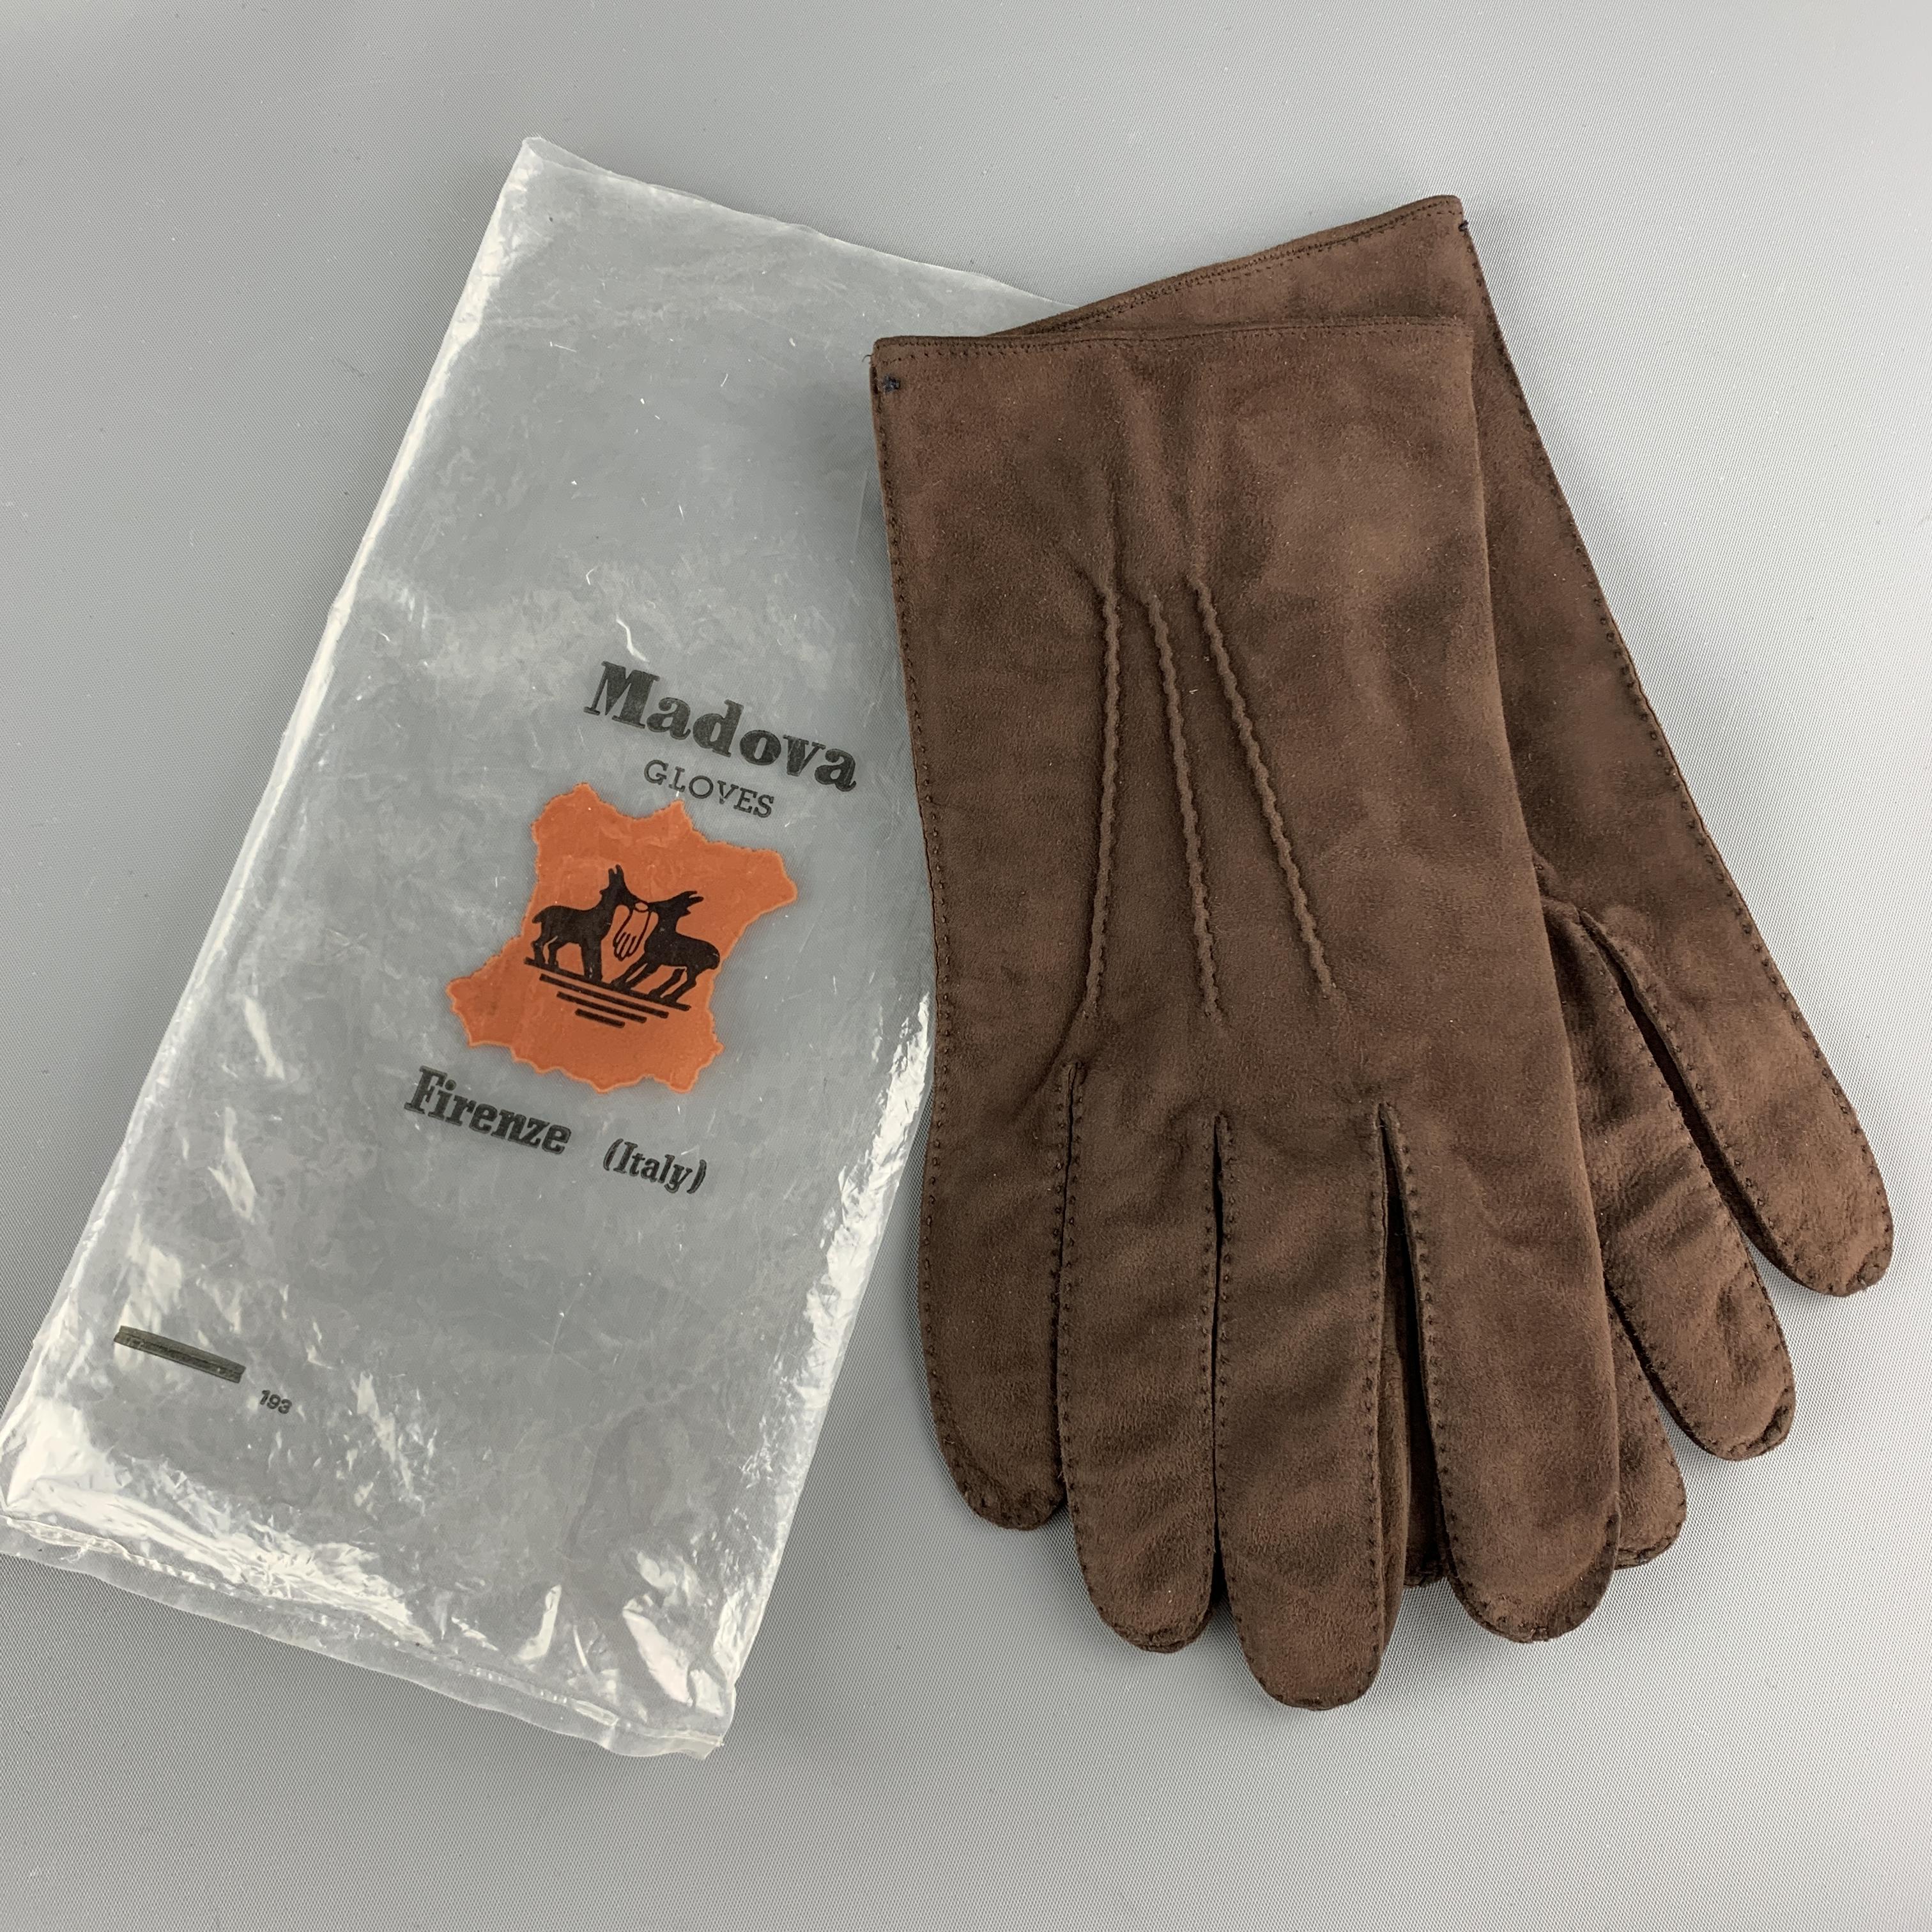 size 9 in gloves